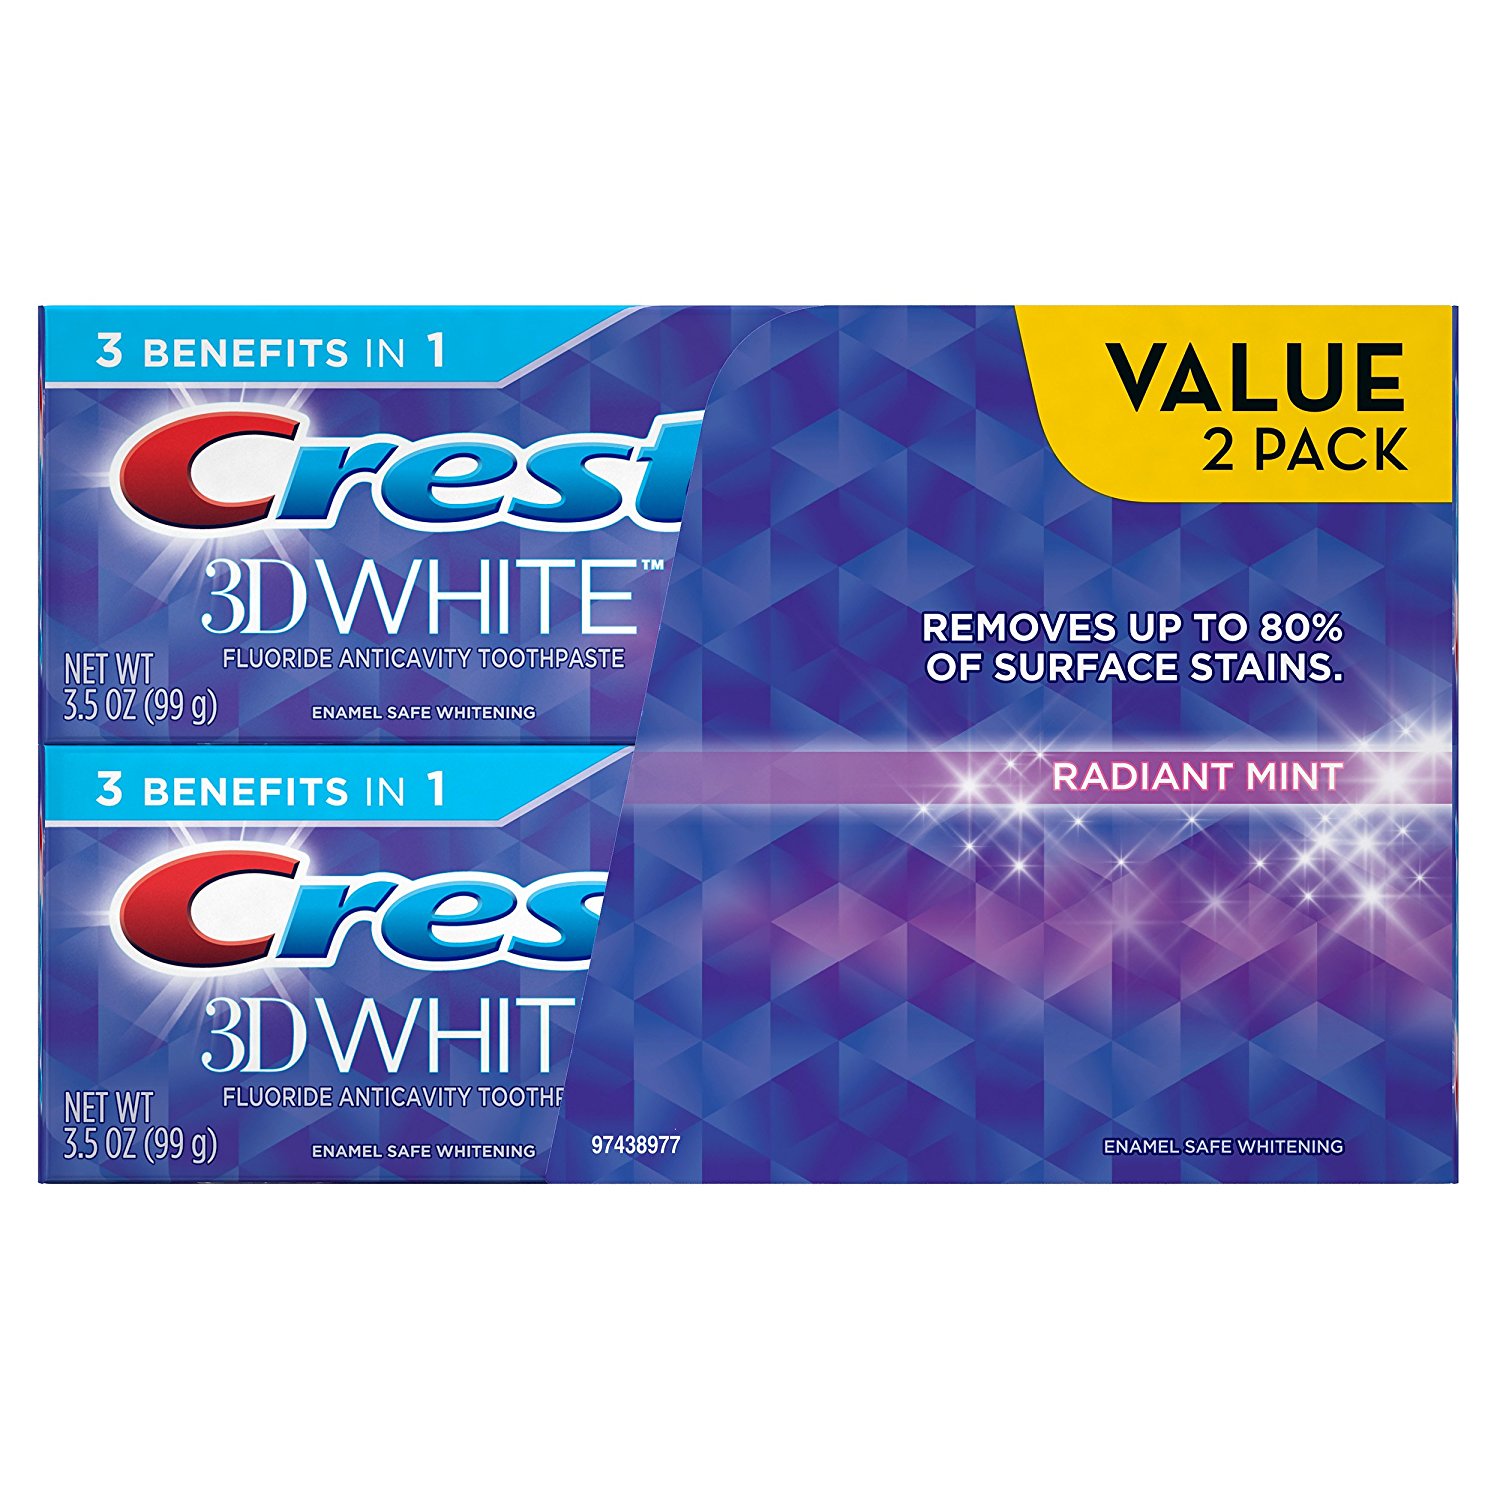 2-pack Crest 3D White Radiant Mint whitening toothpaste for $3.37